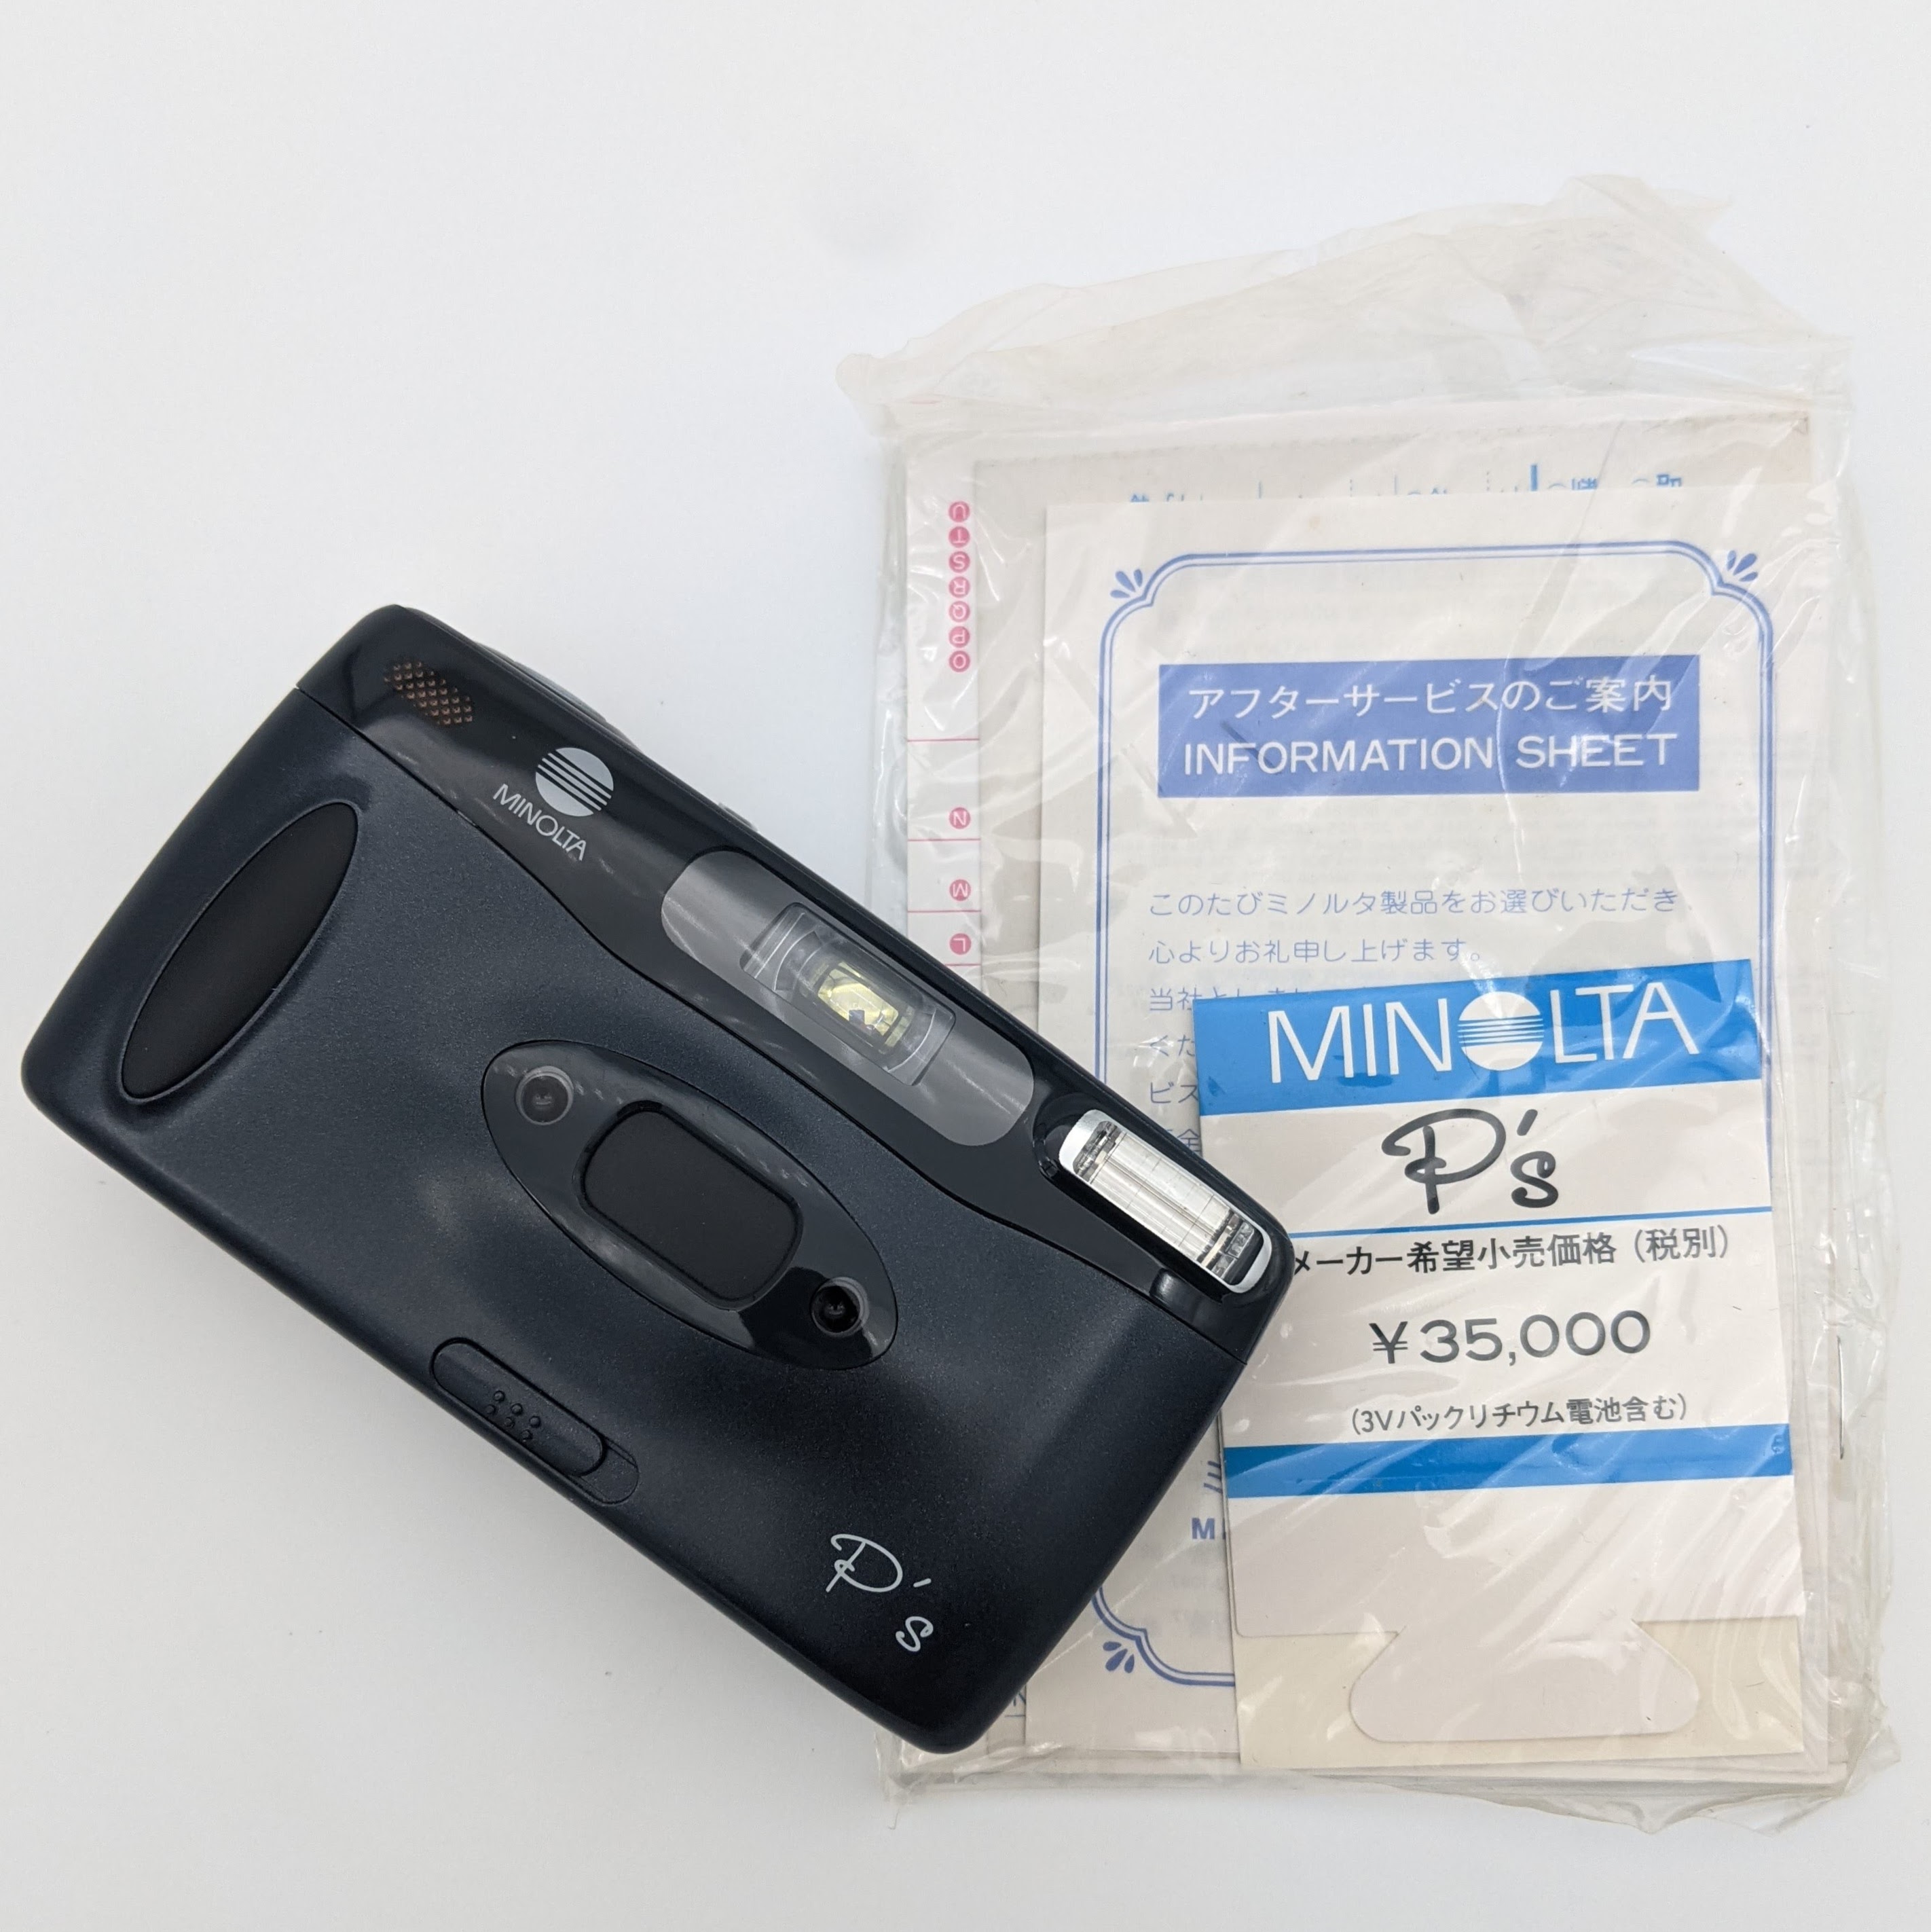 Minolta P’s or Minolta Riva Panorama camera with manual